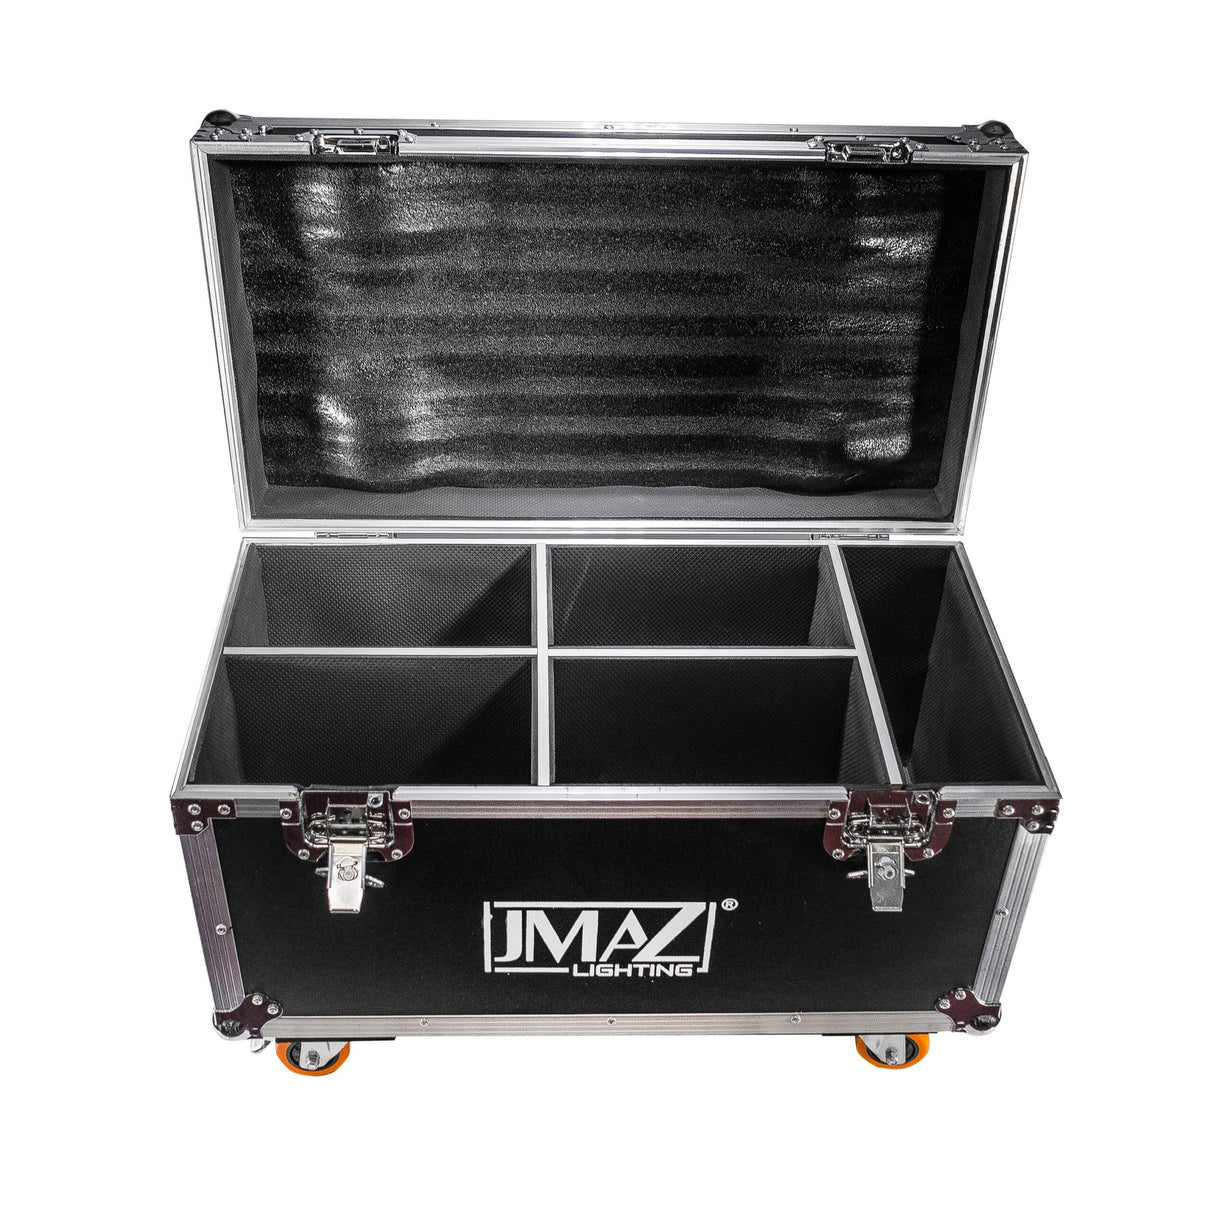 JMAZ Lighting 4 Unit Road Case for Crazy Beam 40 Fusion